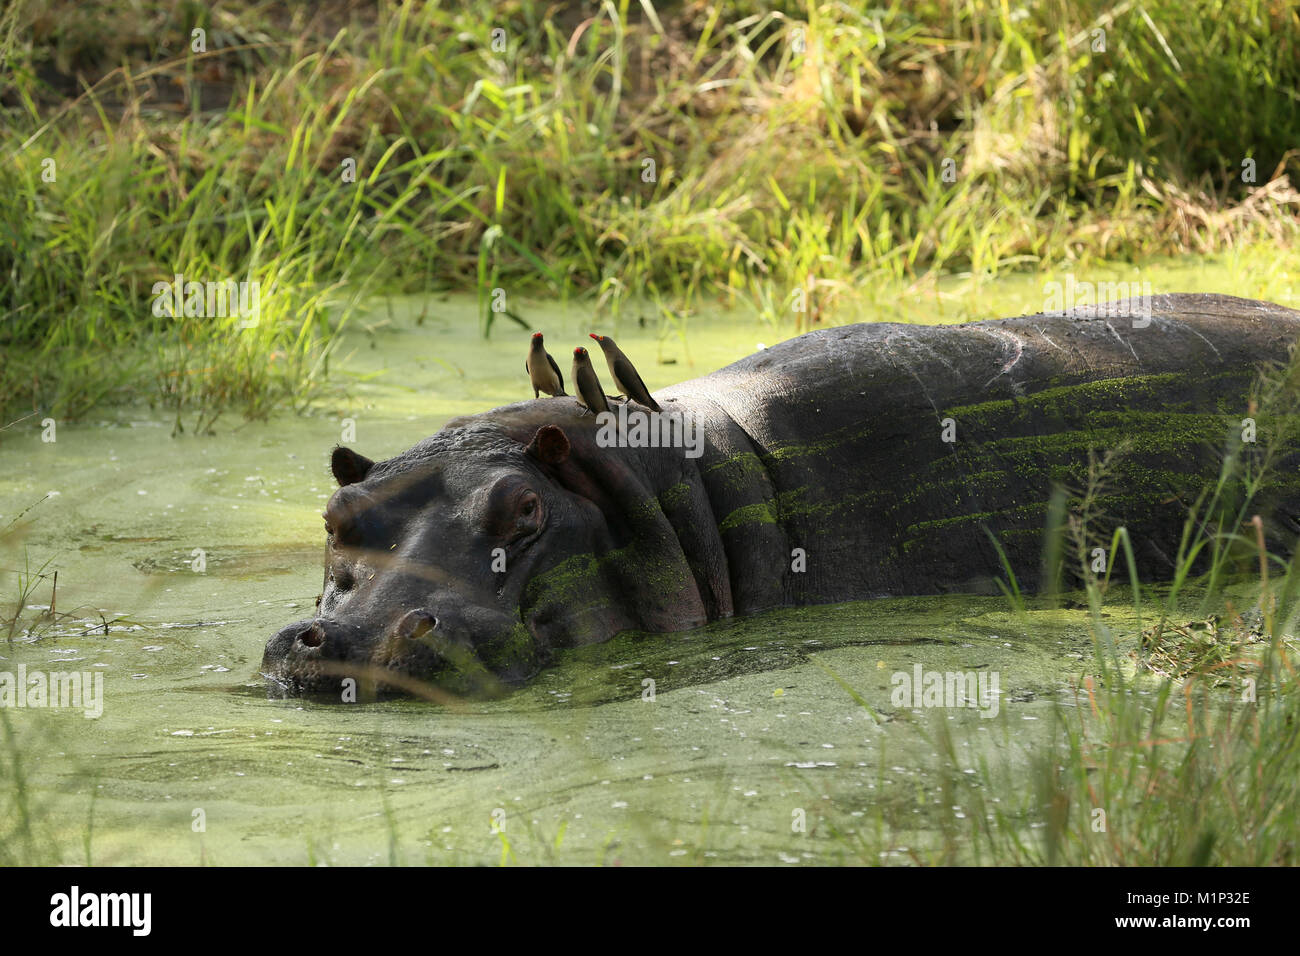 Ippopotamo immerso in acqua, parco nazionale Kruger, Sud Africa e Africa Foto Stock